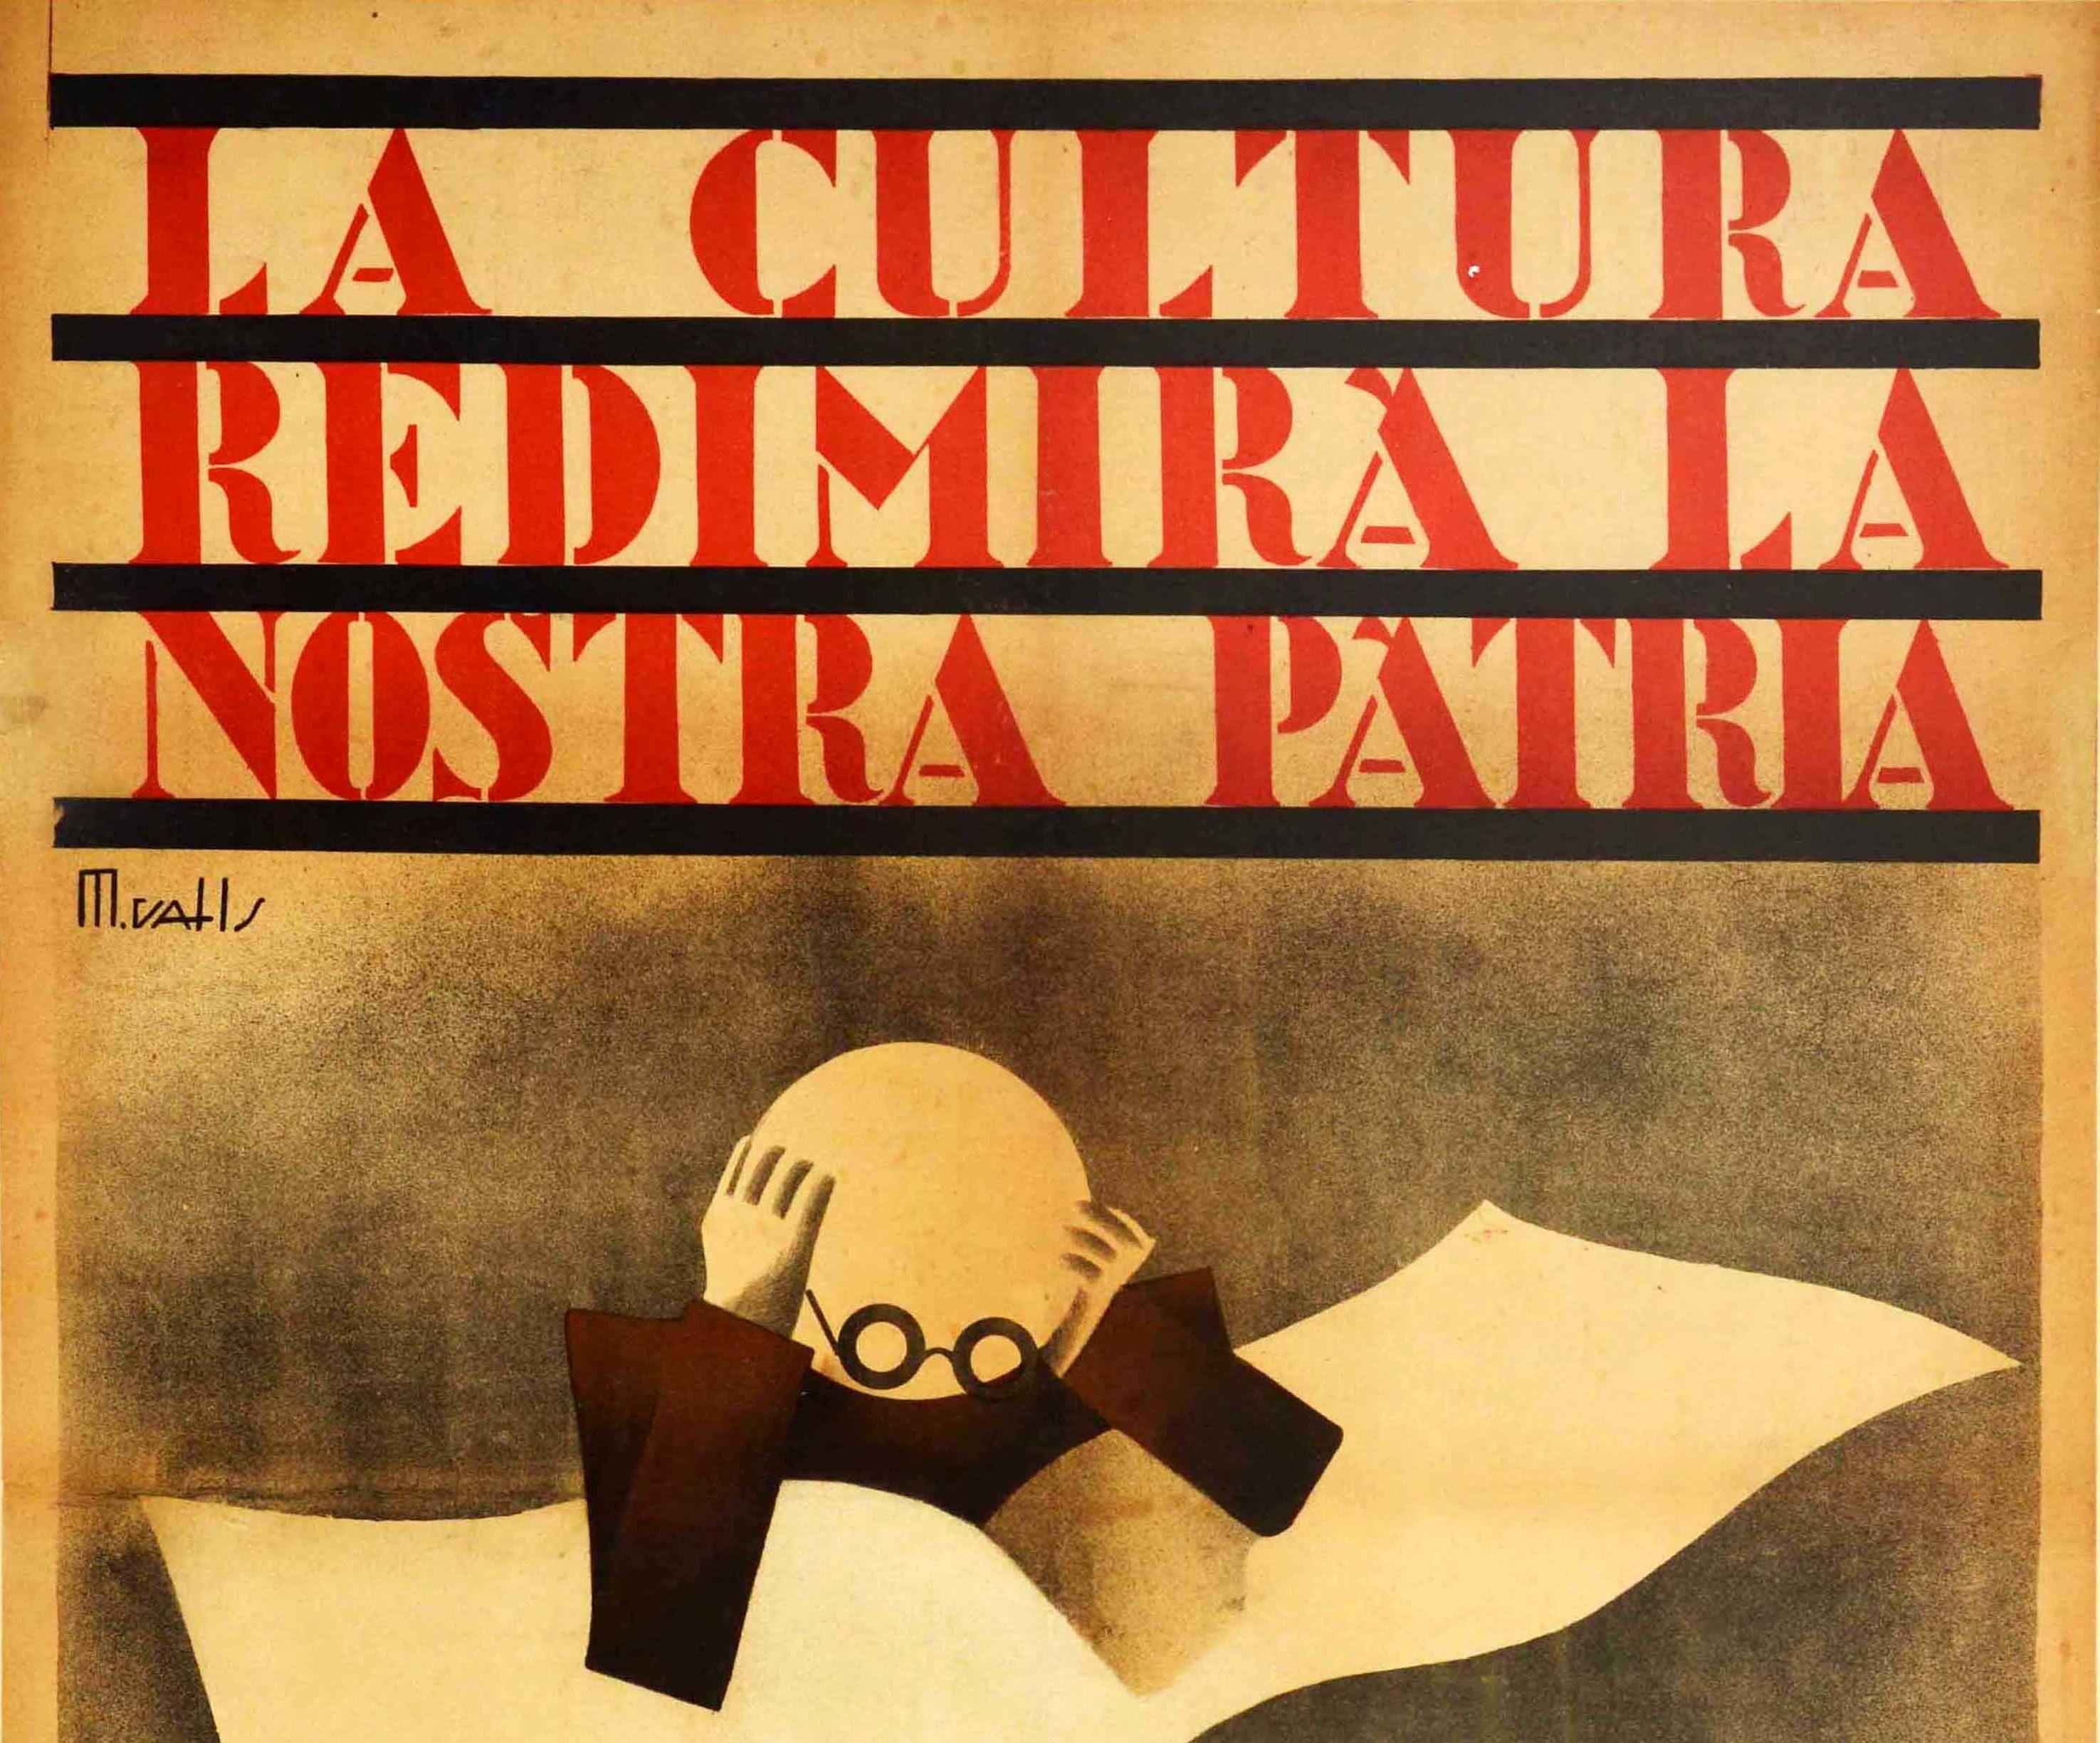 Original Vintage Poster Student Culture Our Homeland Let's Study Civil War Spain - Print by M. Valls